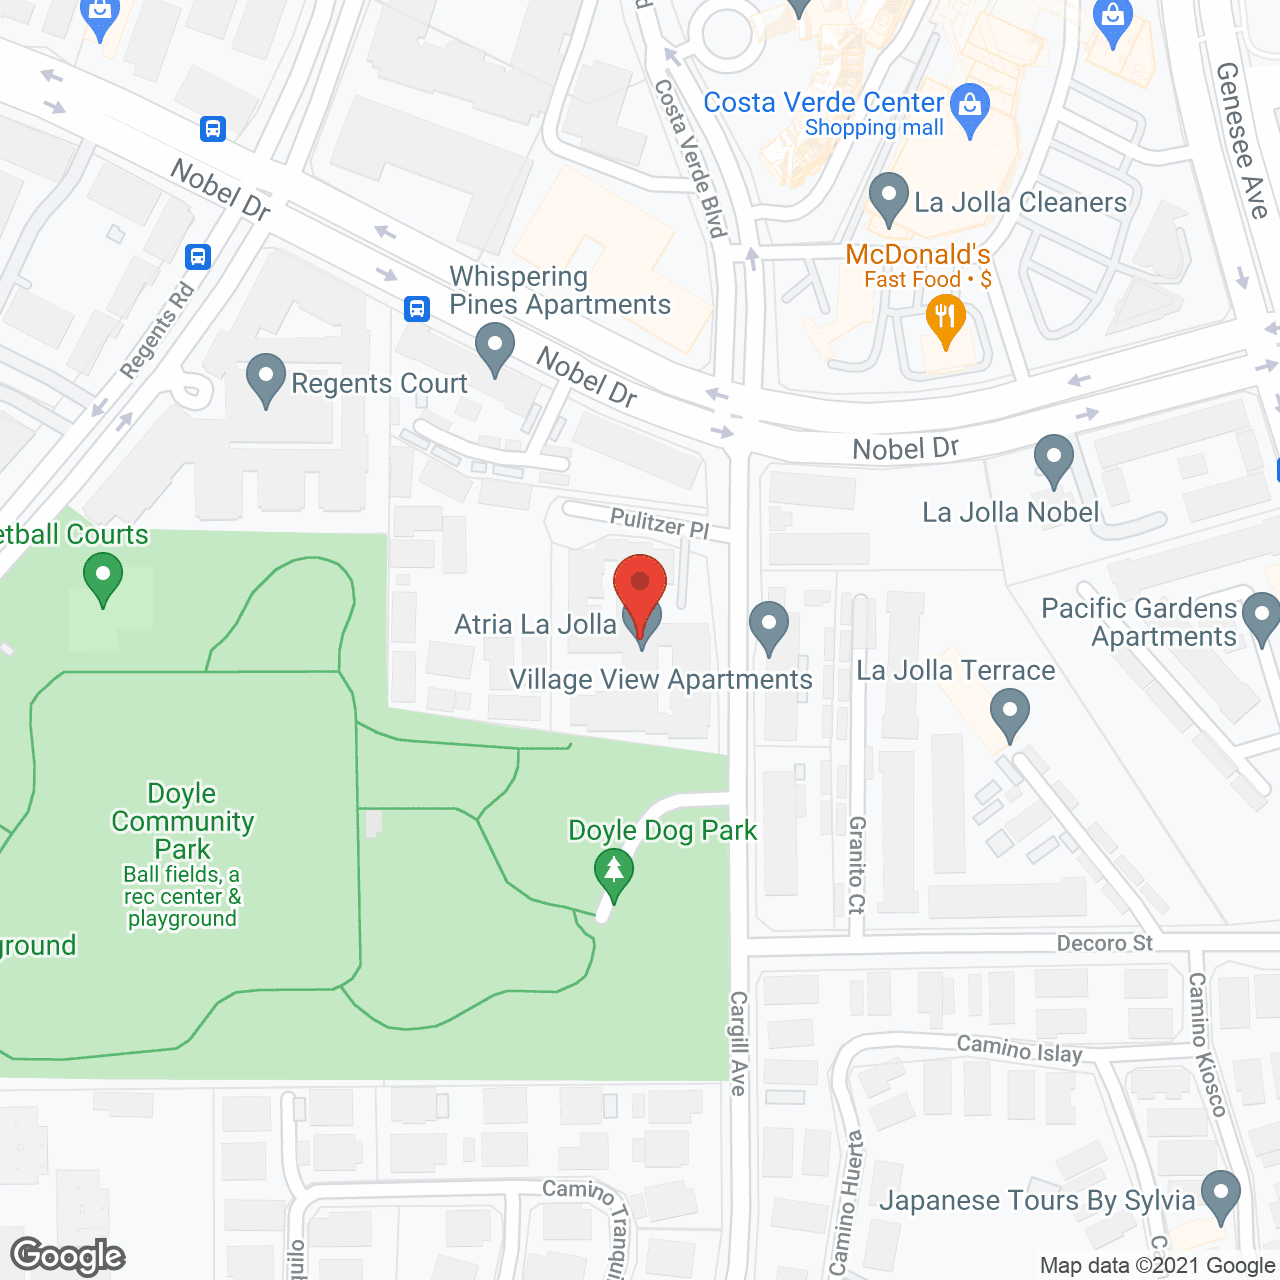 Atria La Jolla in google map